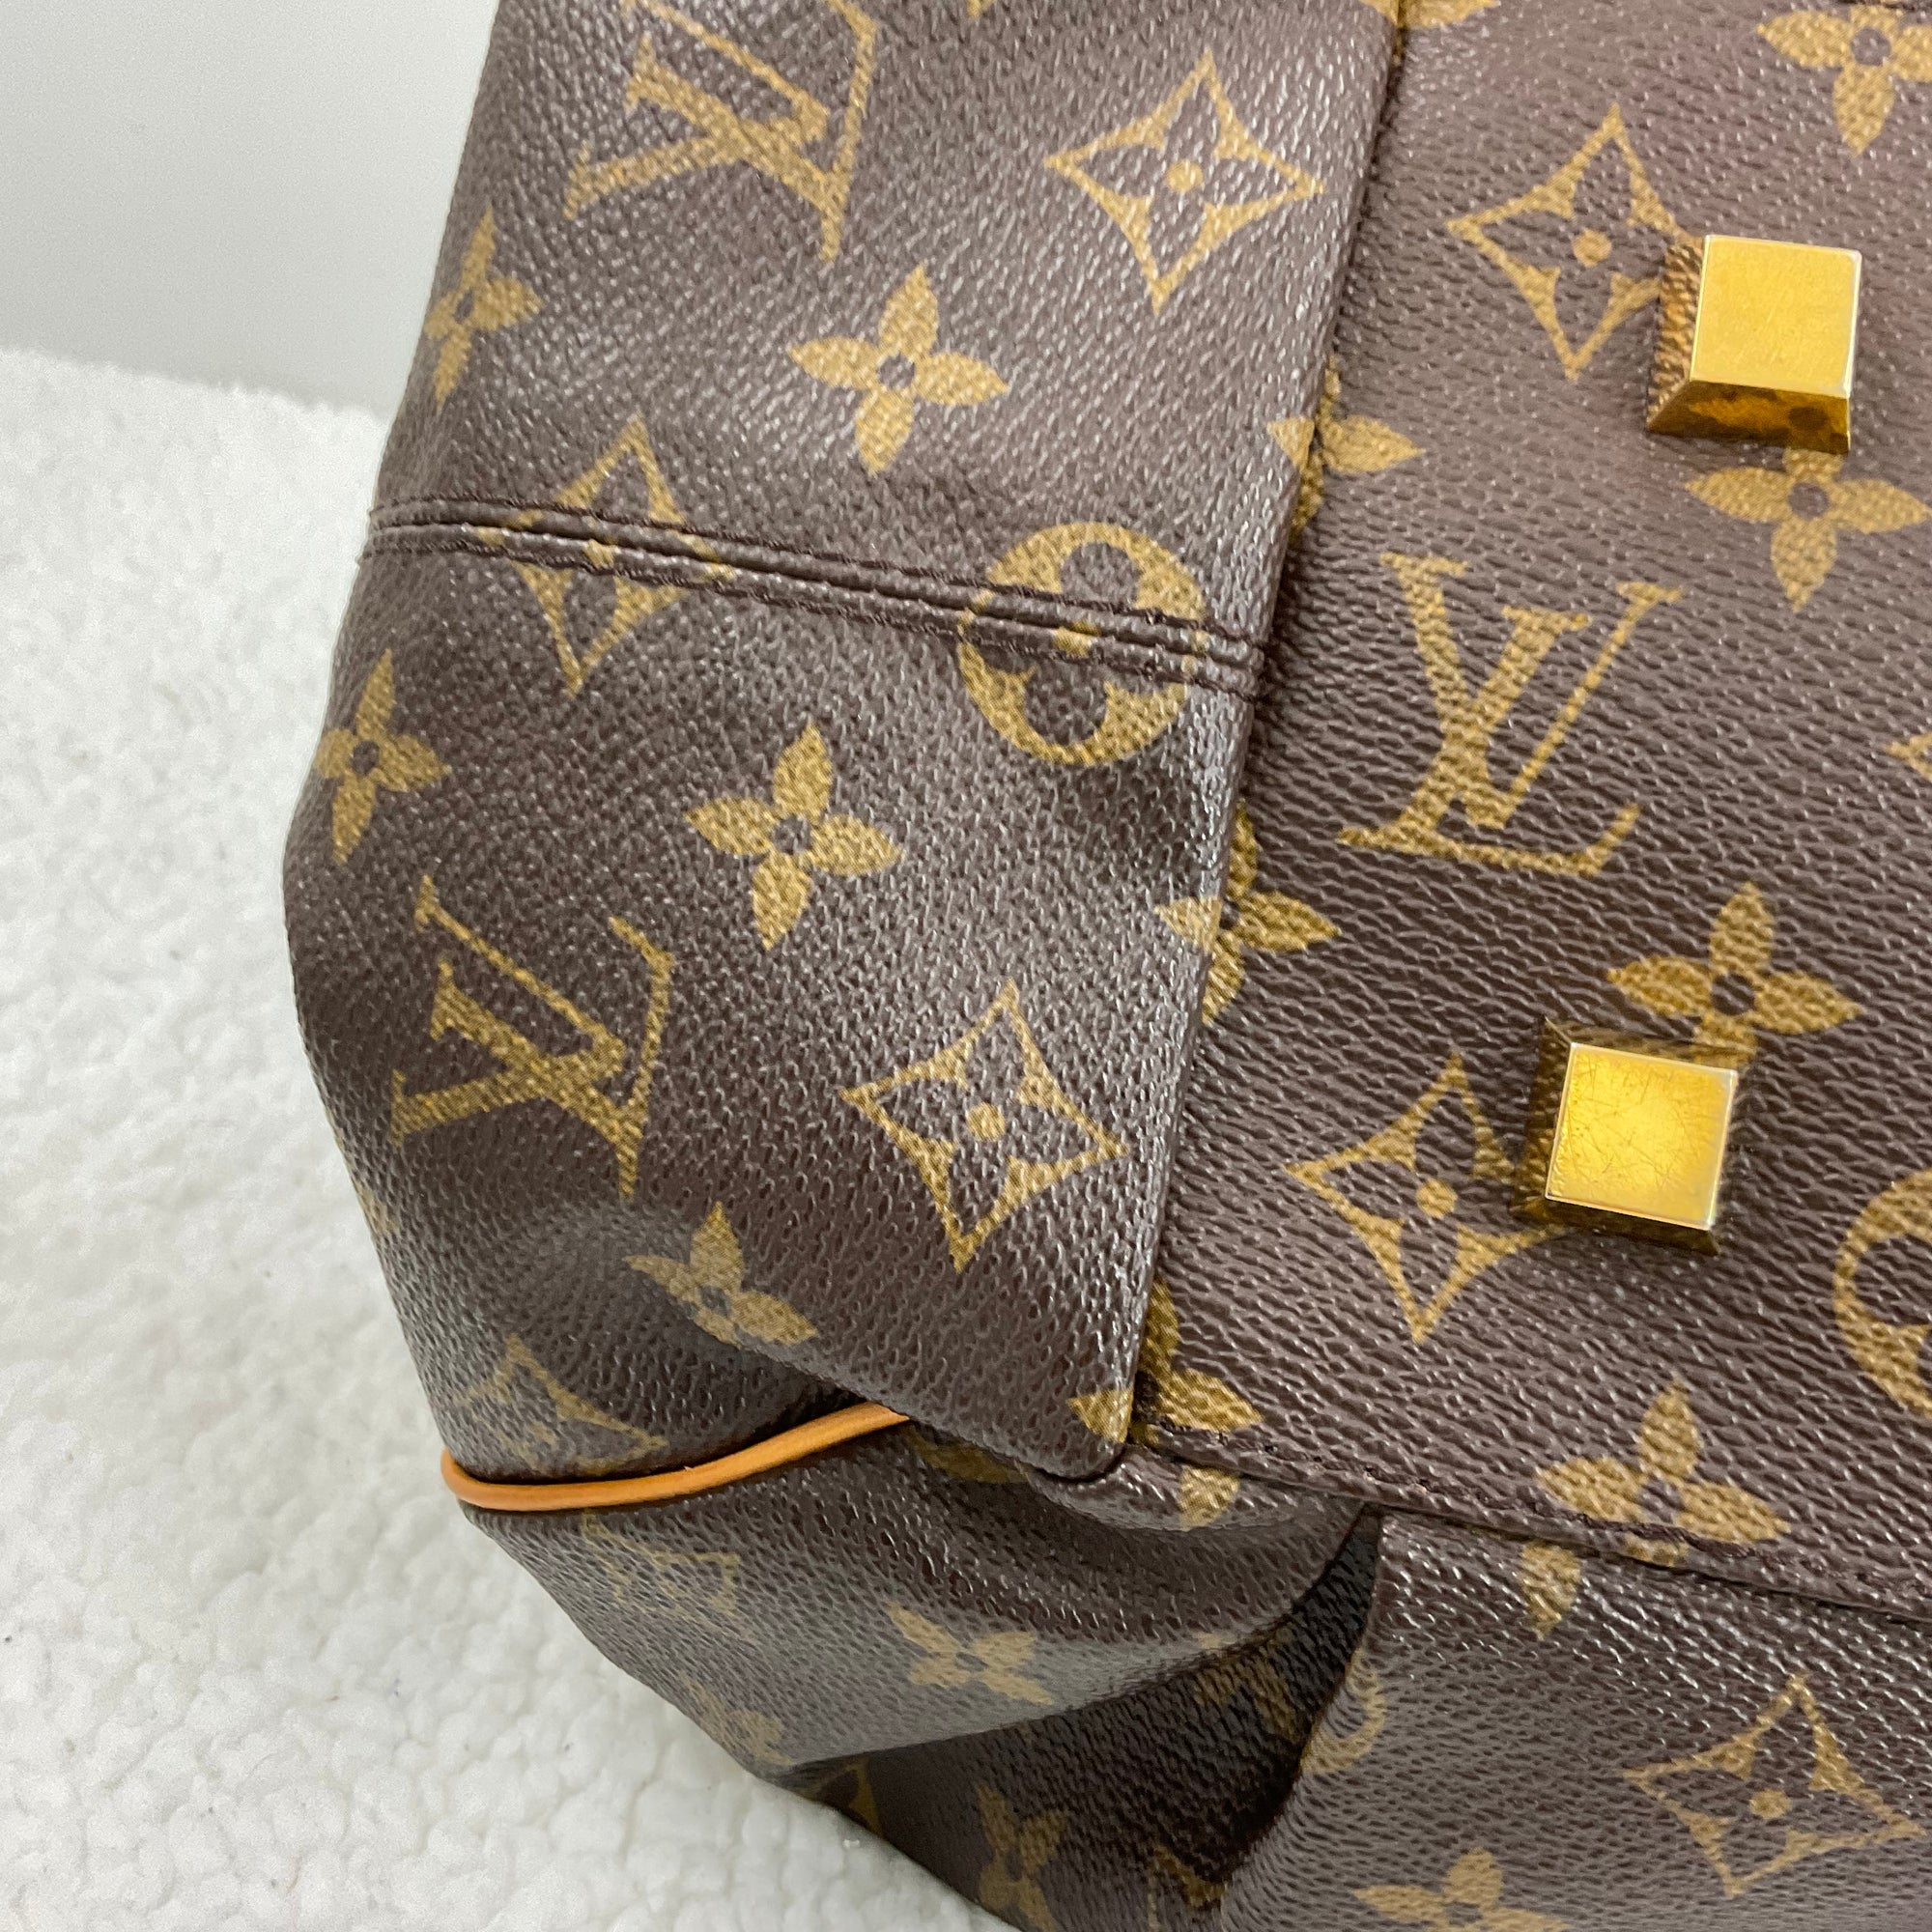 Louis Vuitton Monogram Irene Bag